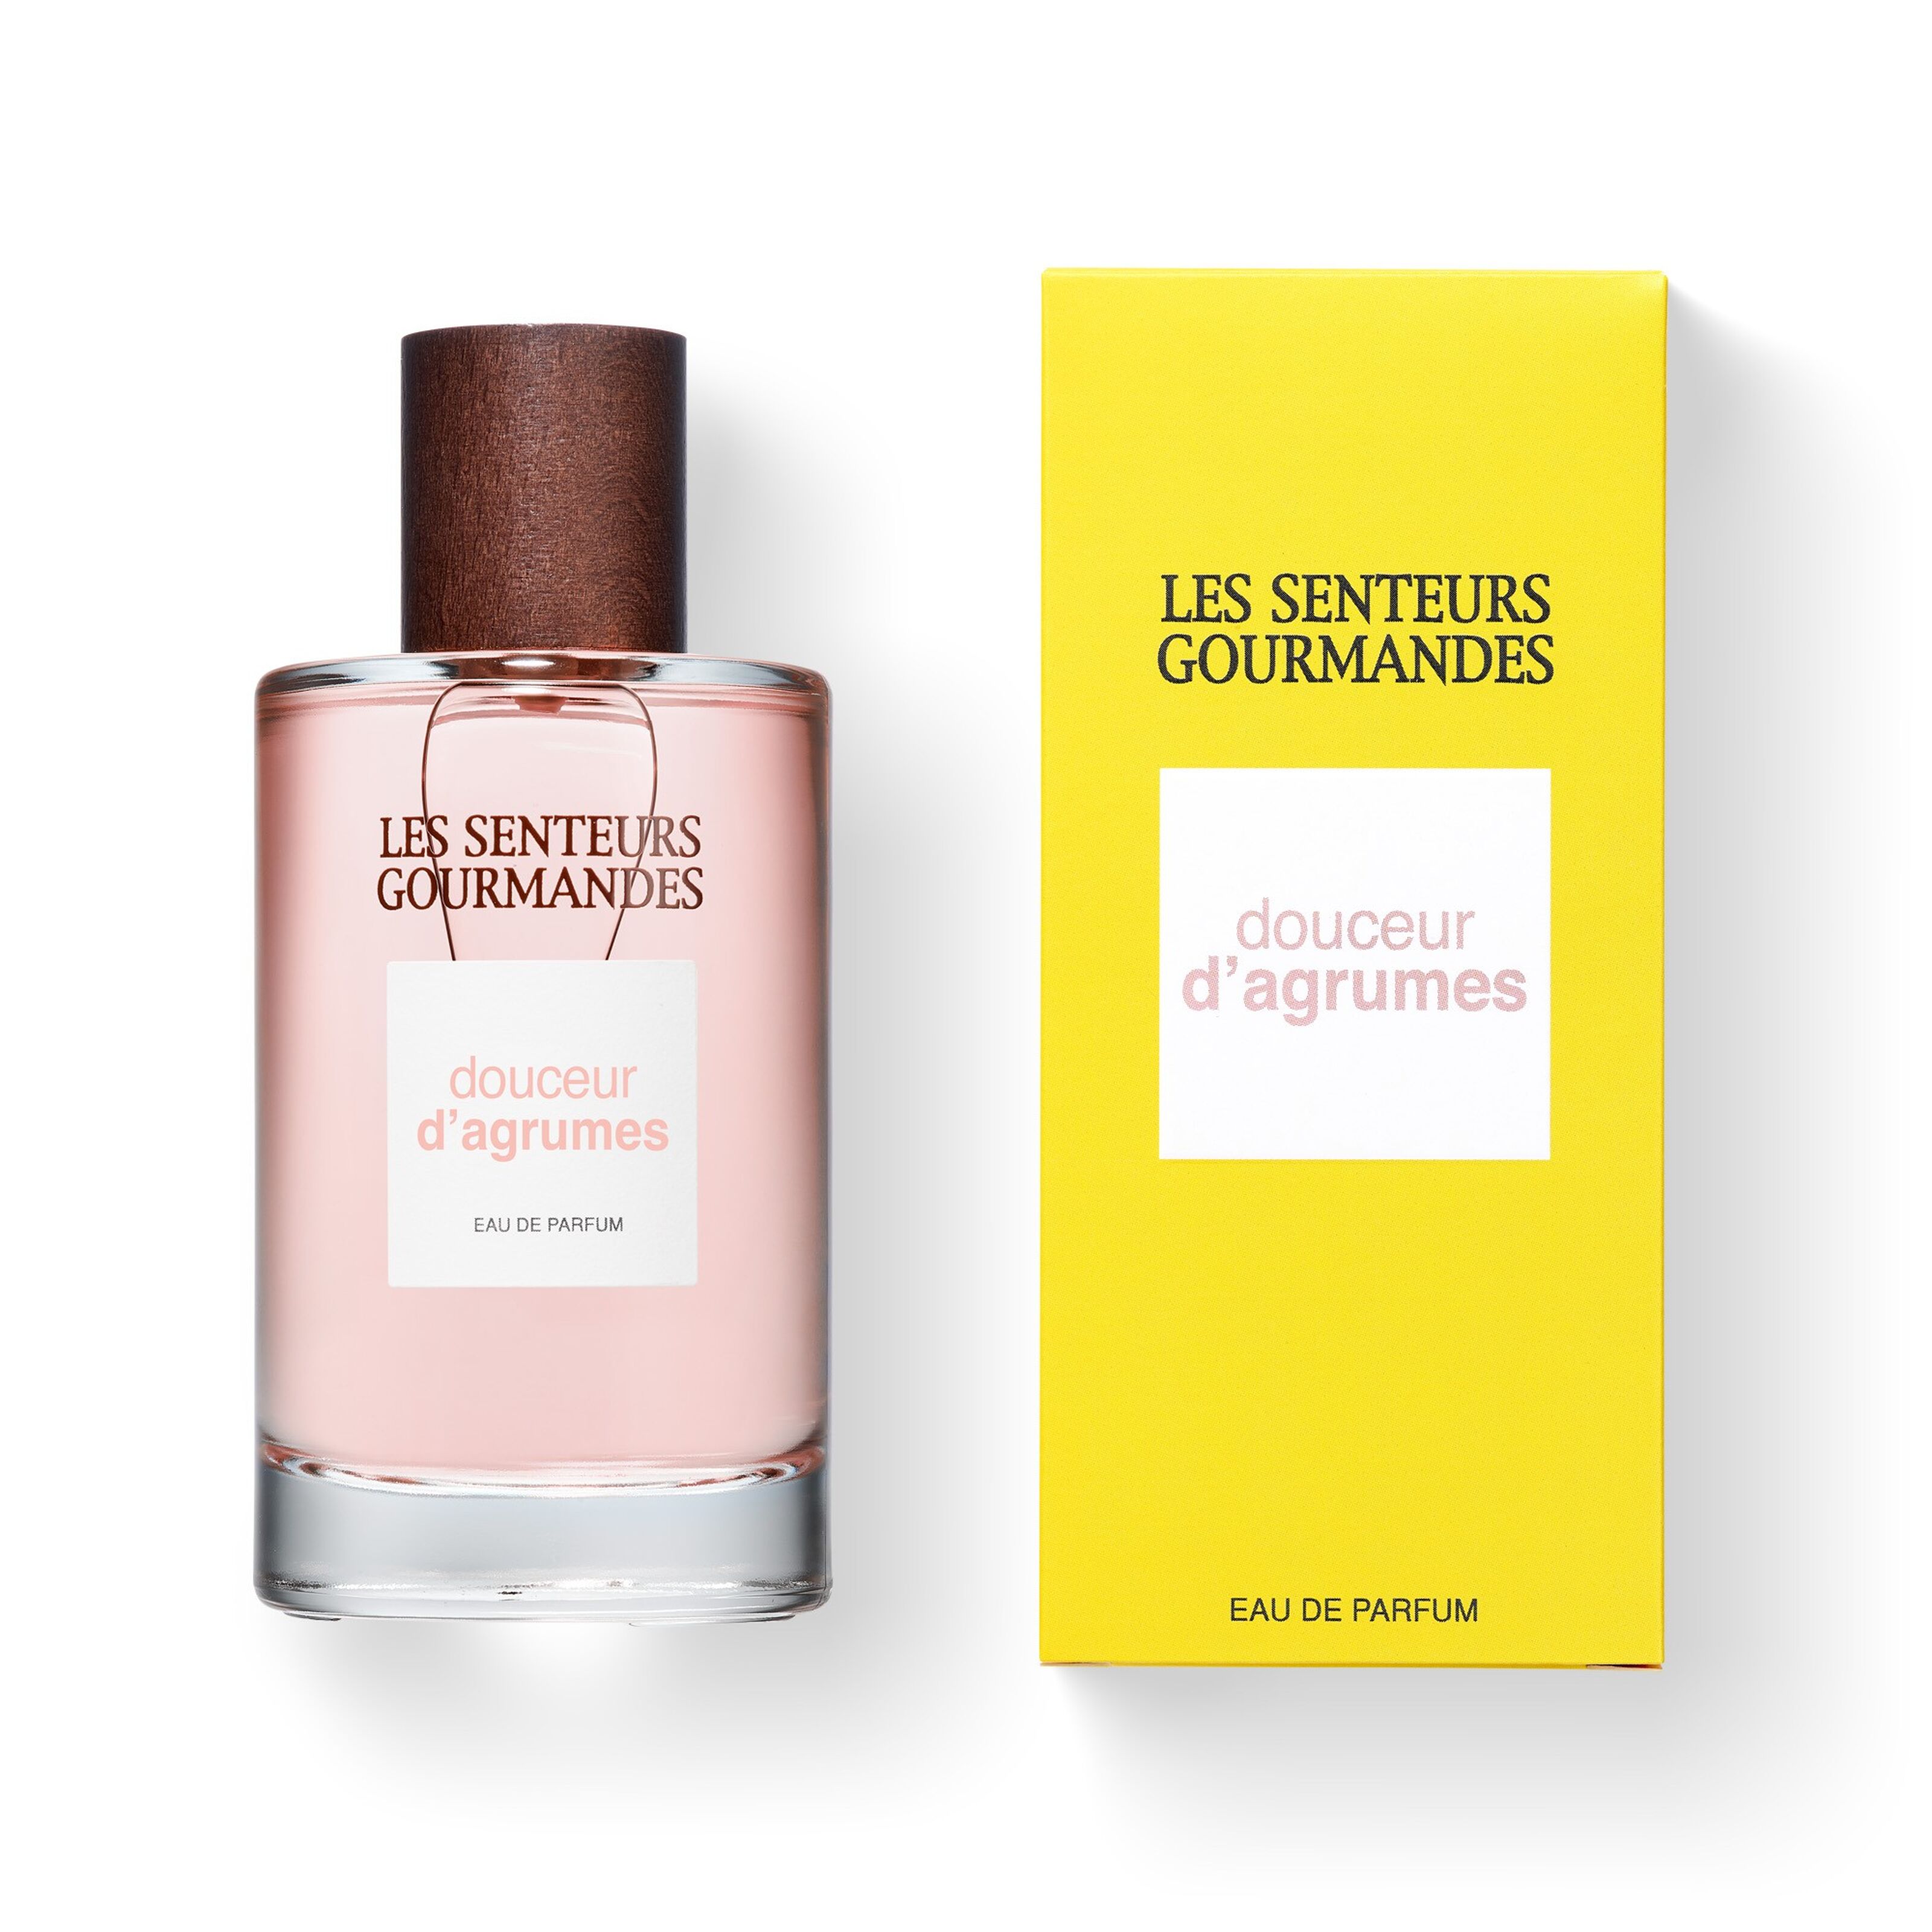 Les Senteurs Gourmandes: perfume and cosmetics